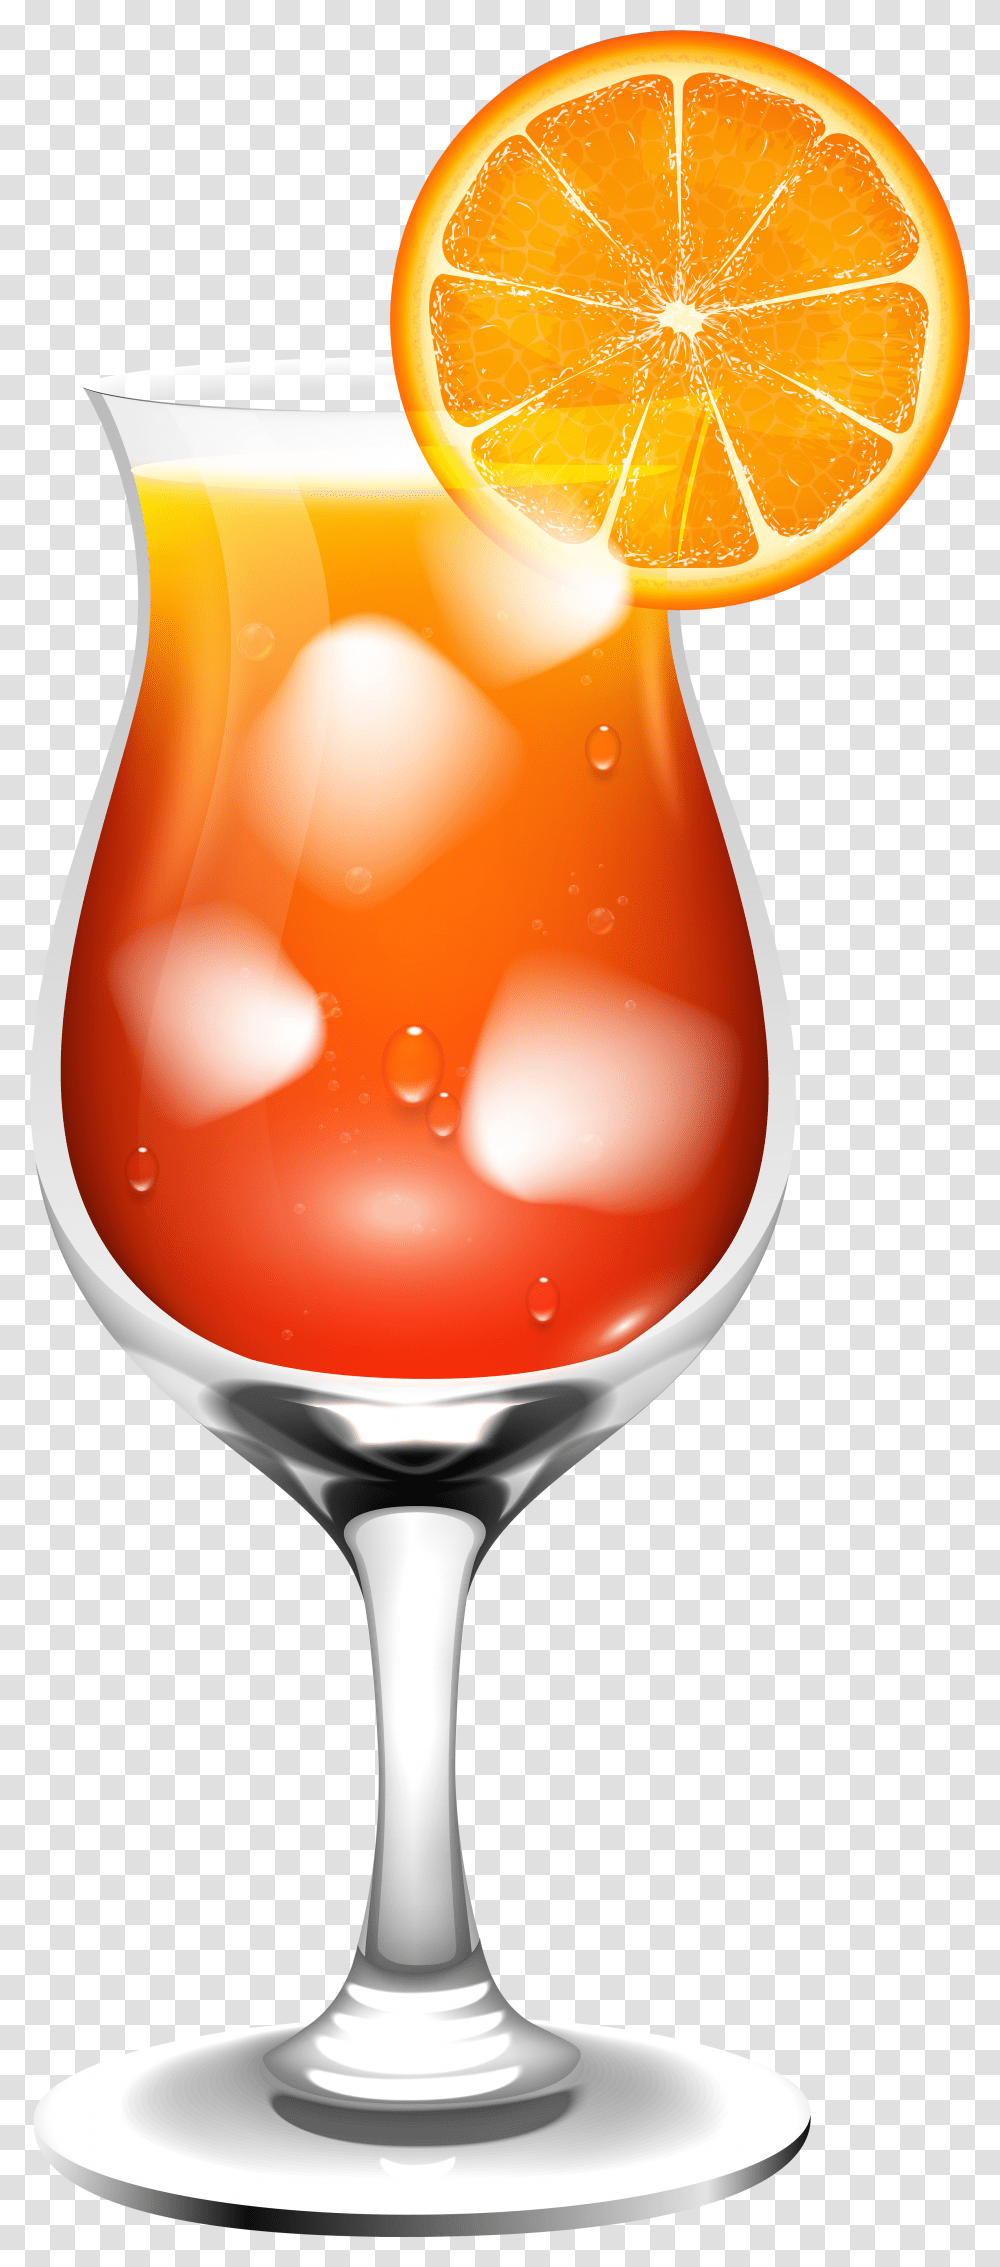 Cocktail Images Free Background Drinks Clip Art Transparent Png